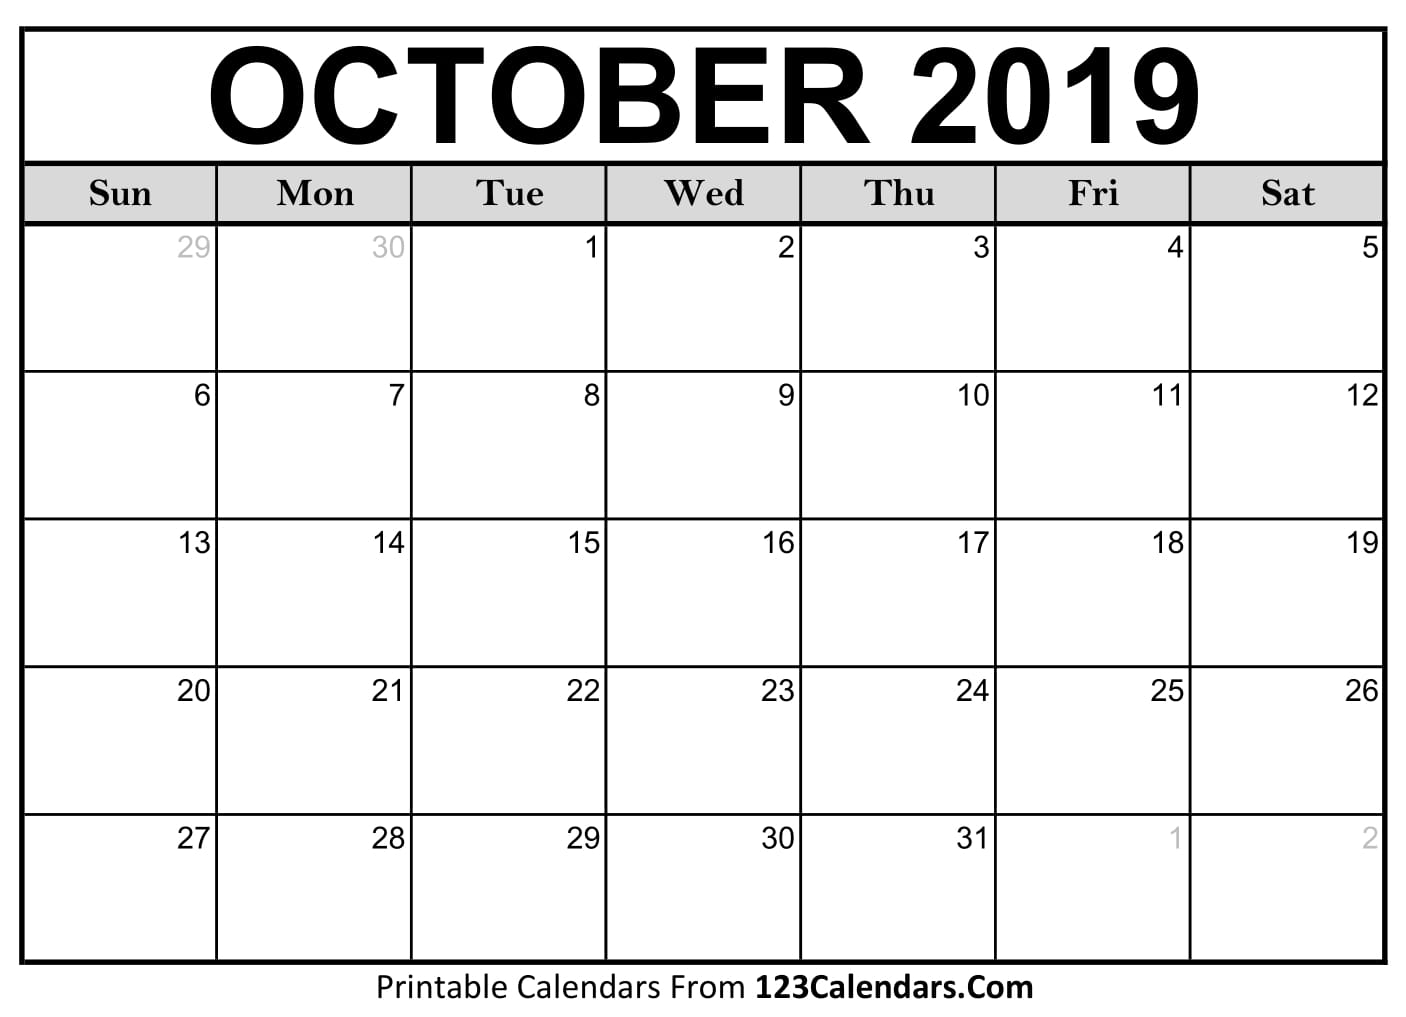 October 2019 Calendar (Blank) Easily Printable 123Calendars